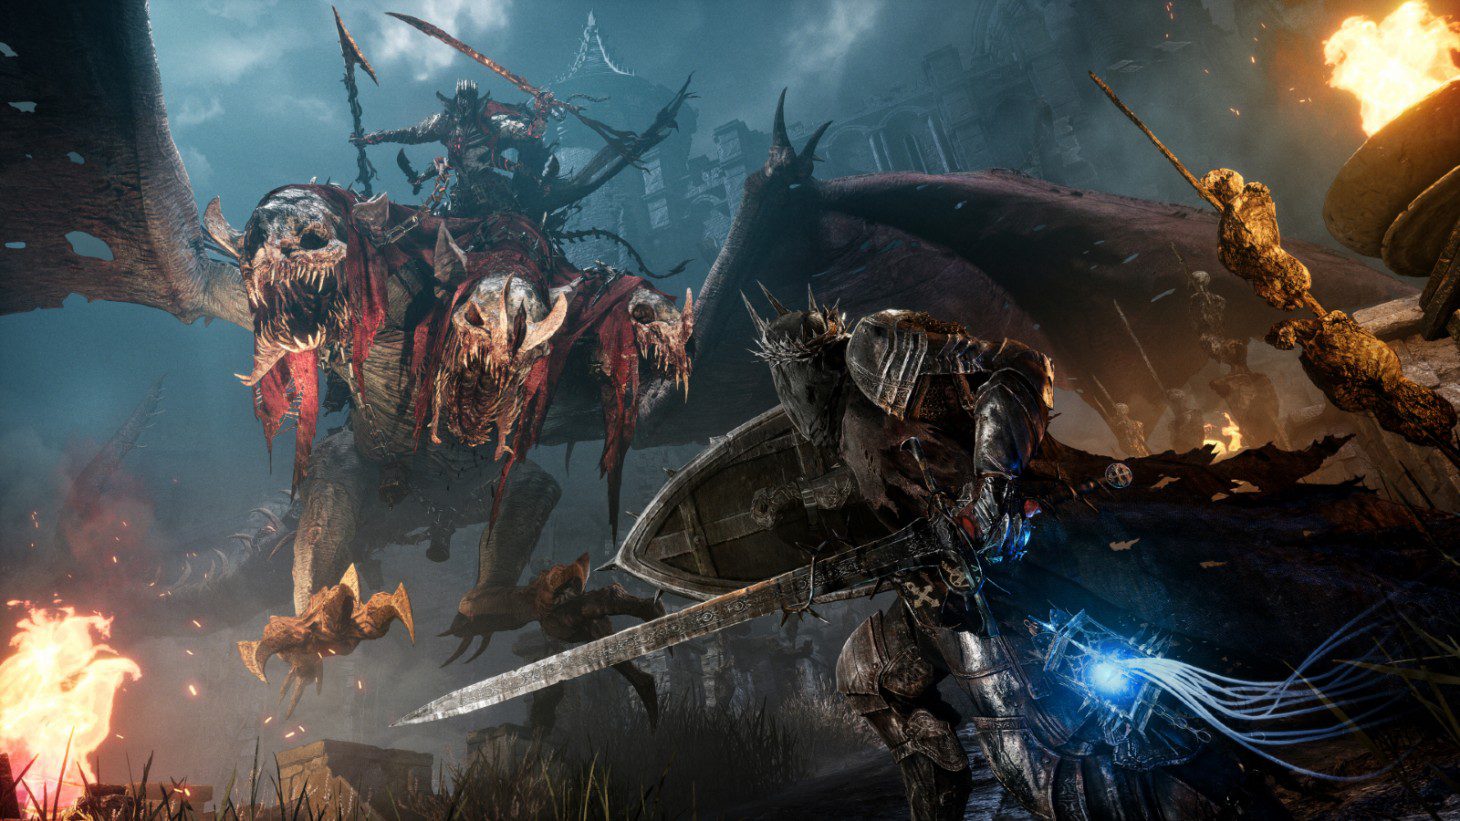 Expansão Shadows of Change chega a Total War: Warhammer III